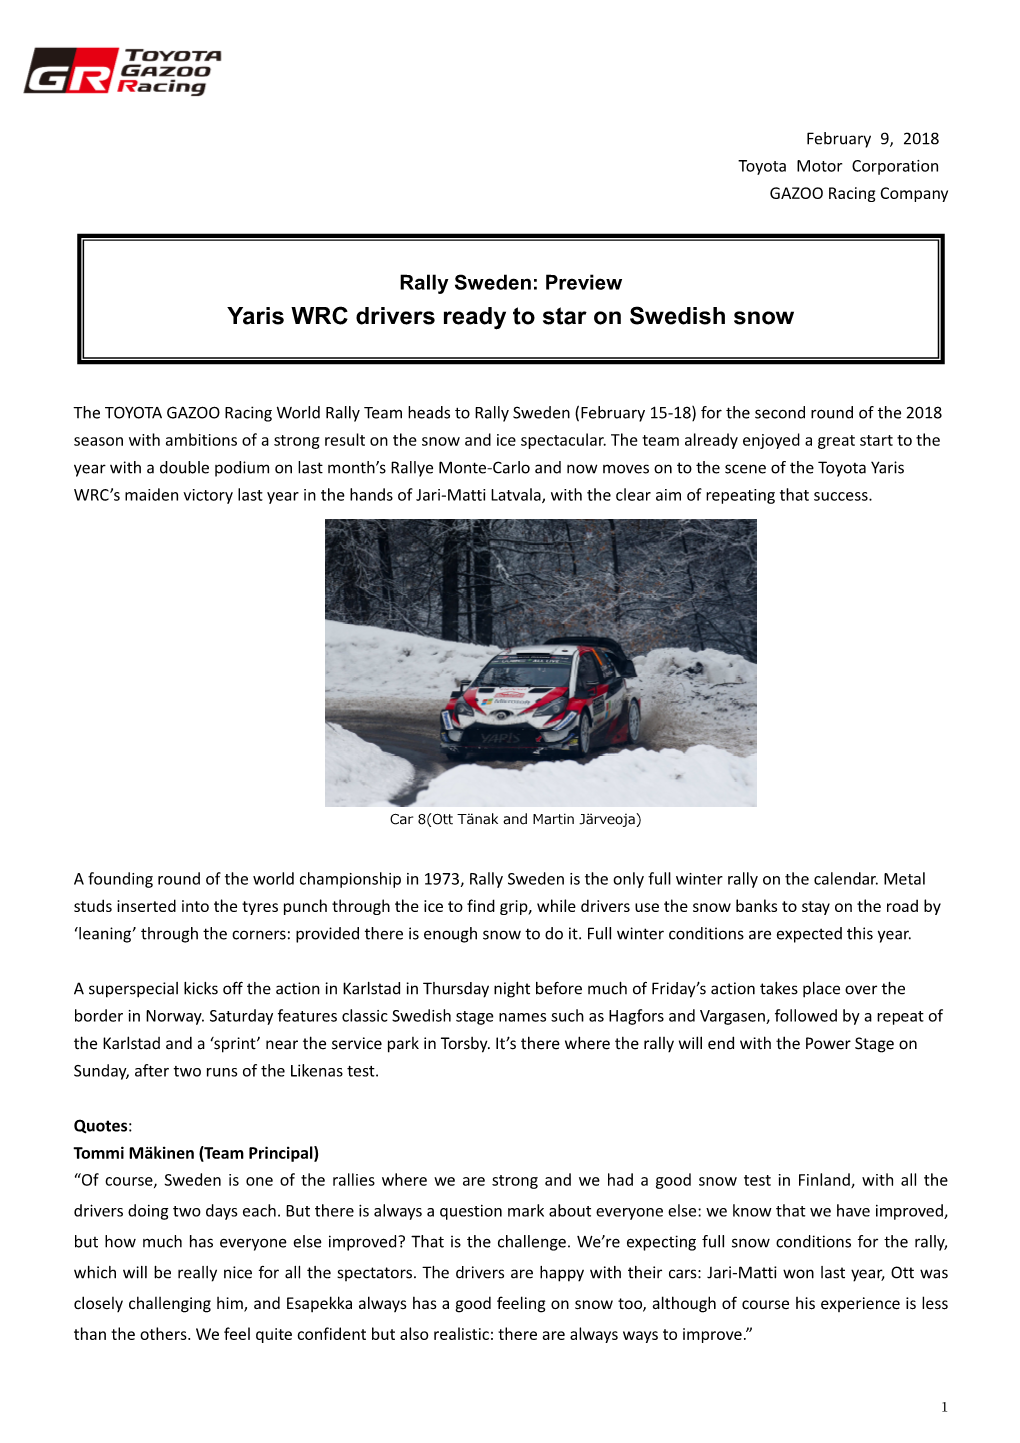 Yaris WRC Drivers Ready to Star on Swedish Snow